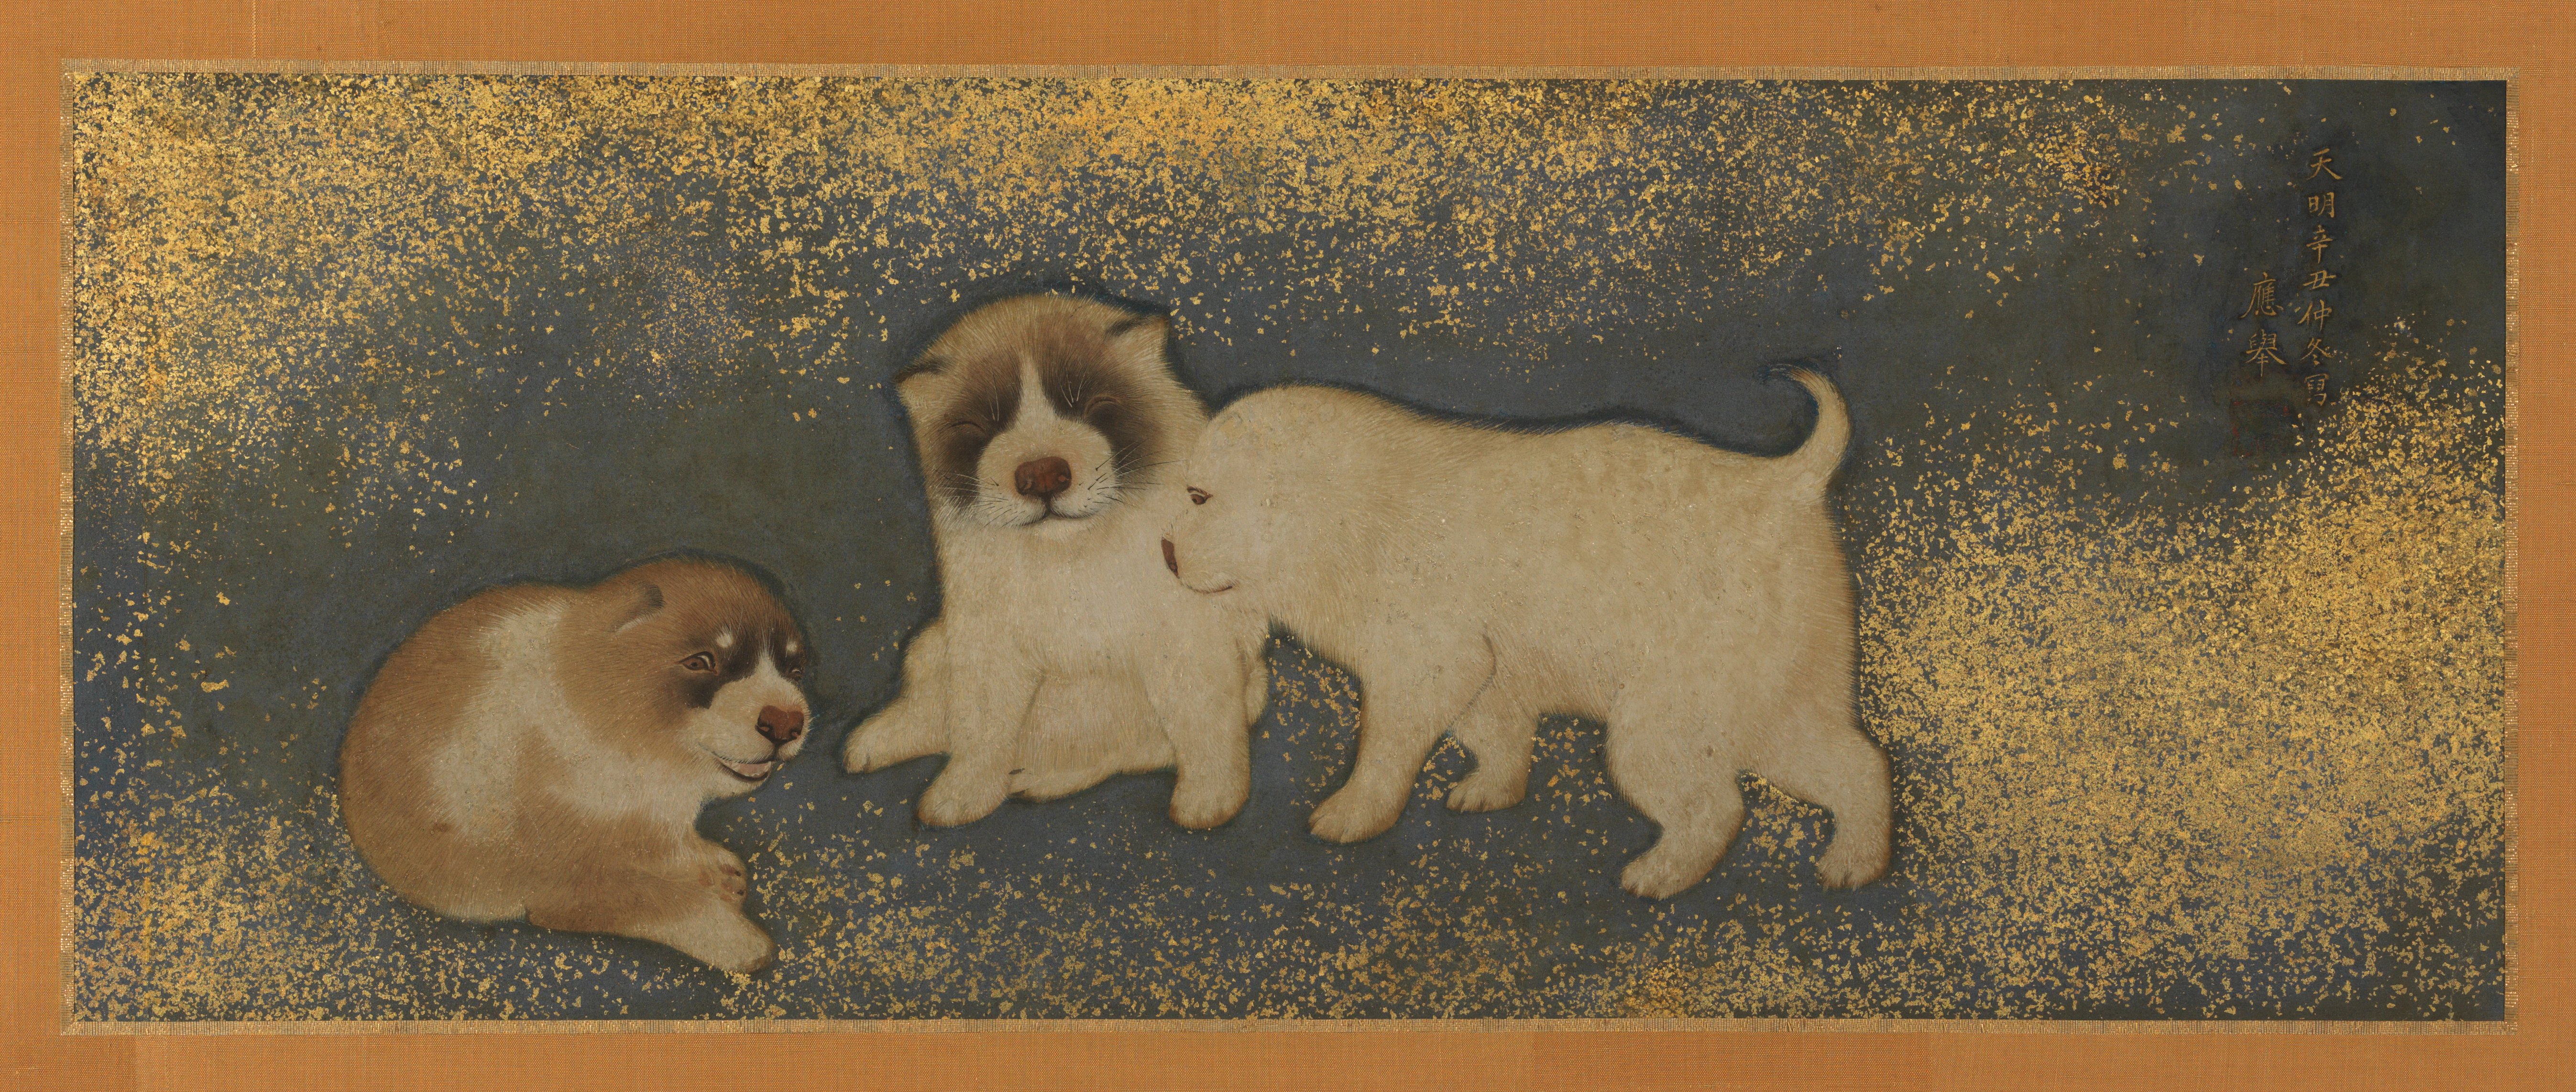 狗子図 by Maruyama Ōkyo - 1781年 - 24.45 × 63.18 cm 